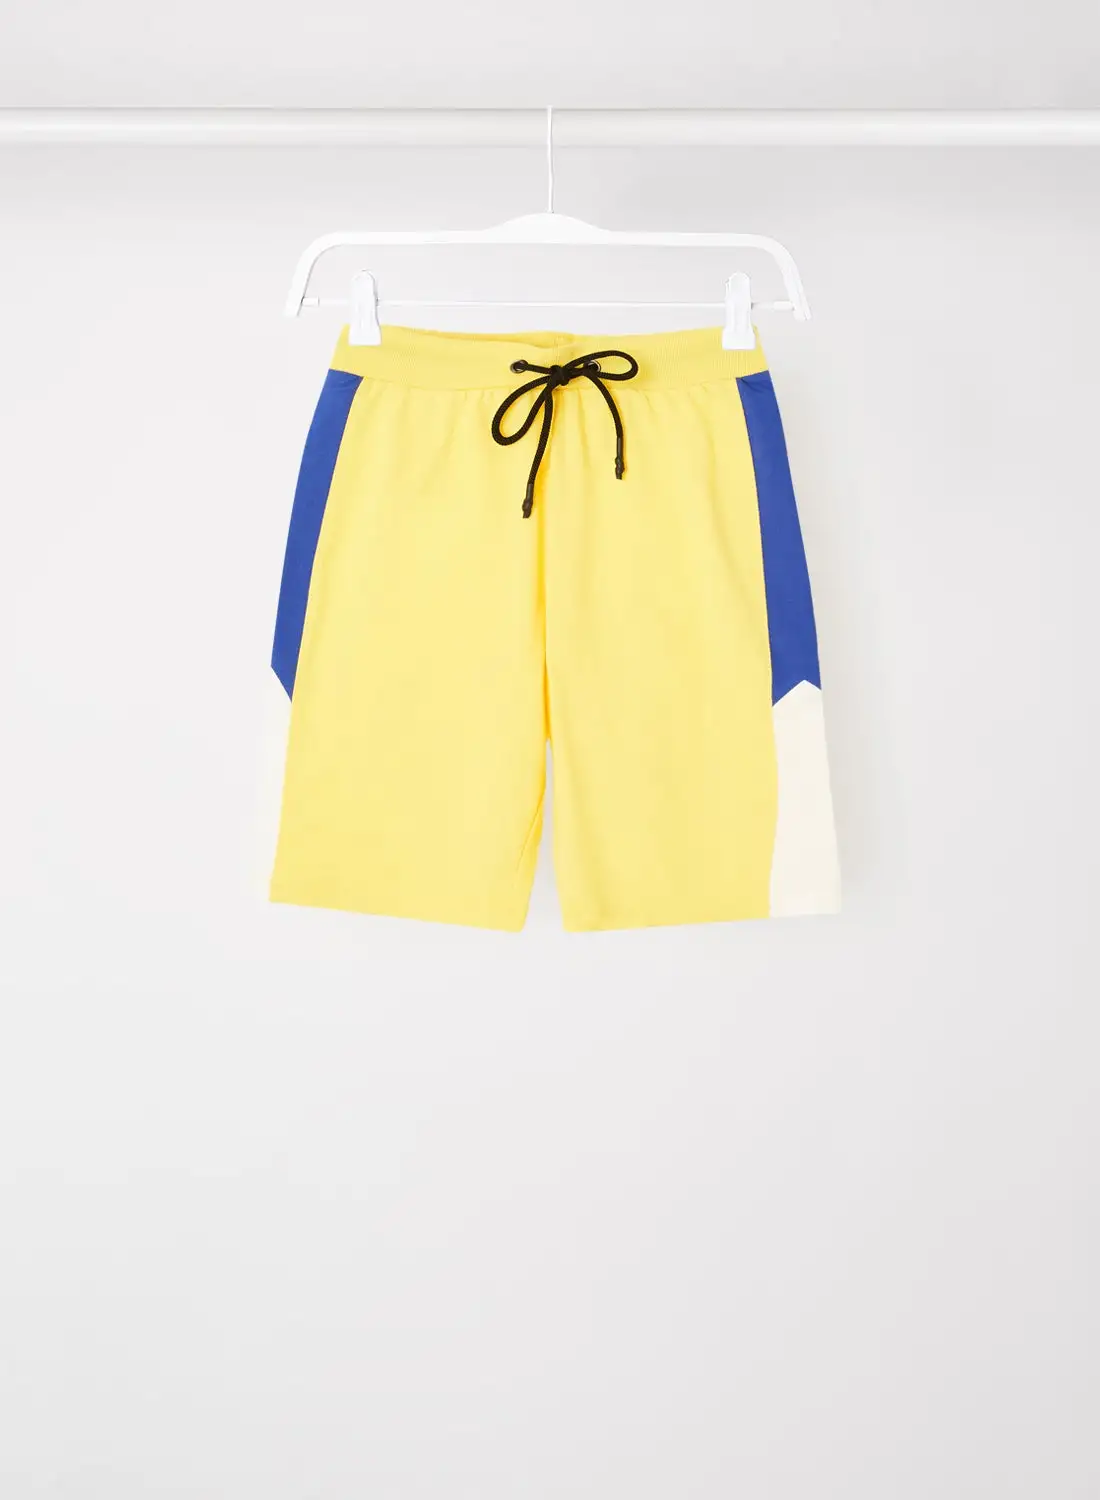 ABOF Colourblock Pattern Elastic Waistband Drawstring Shorts Yellow/Blue/White